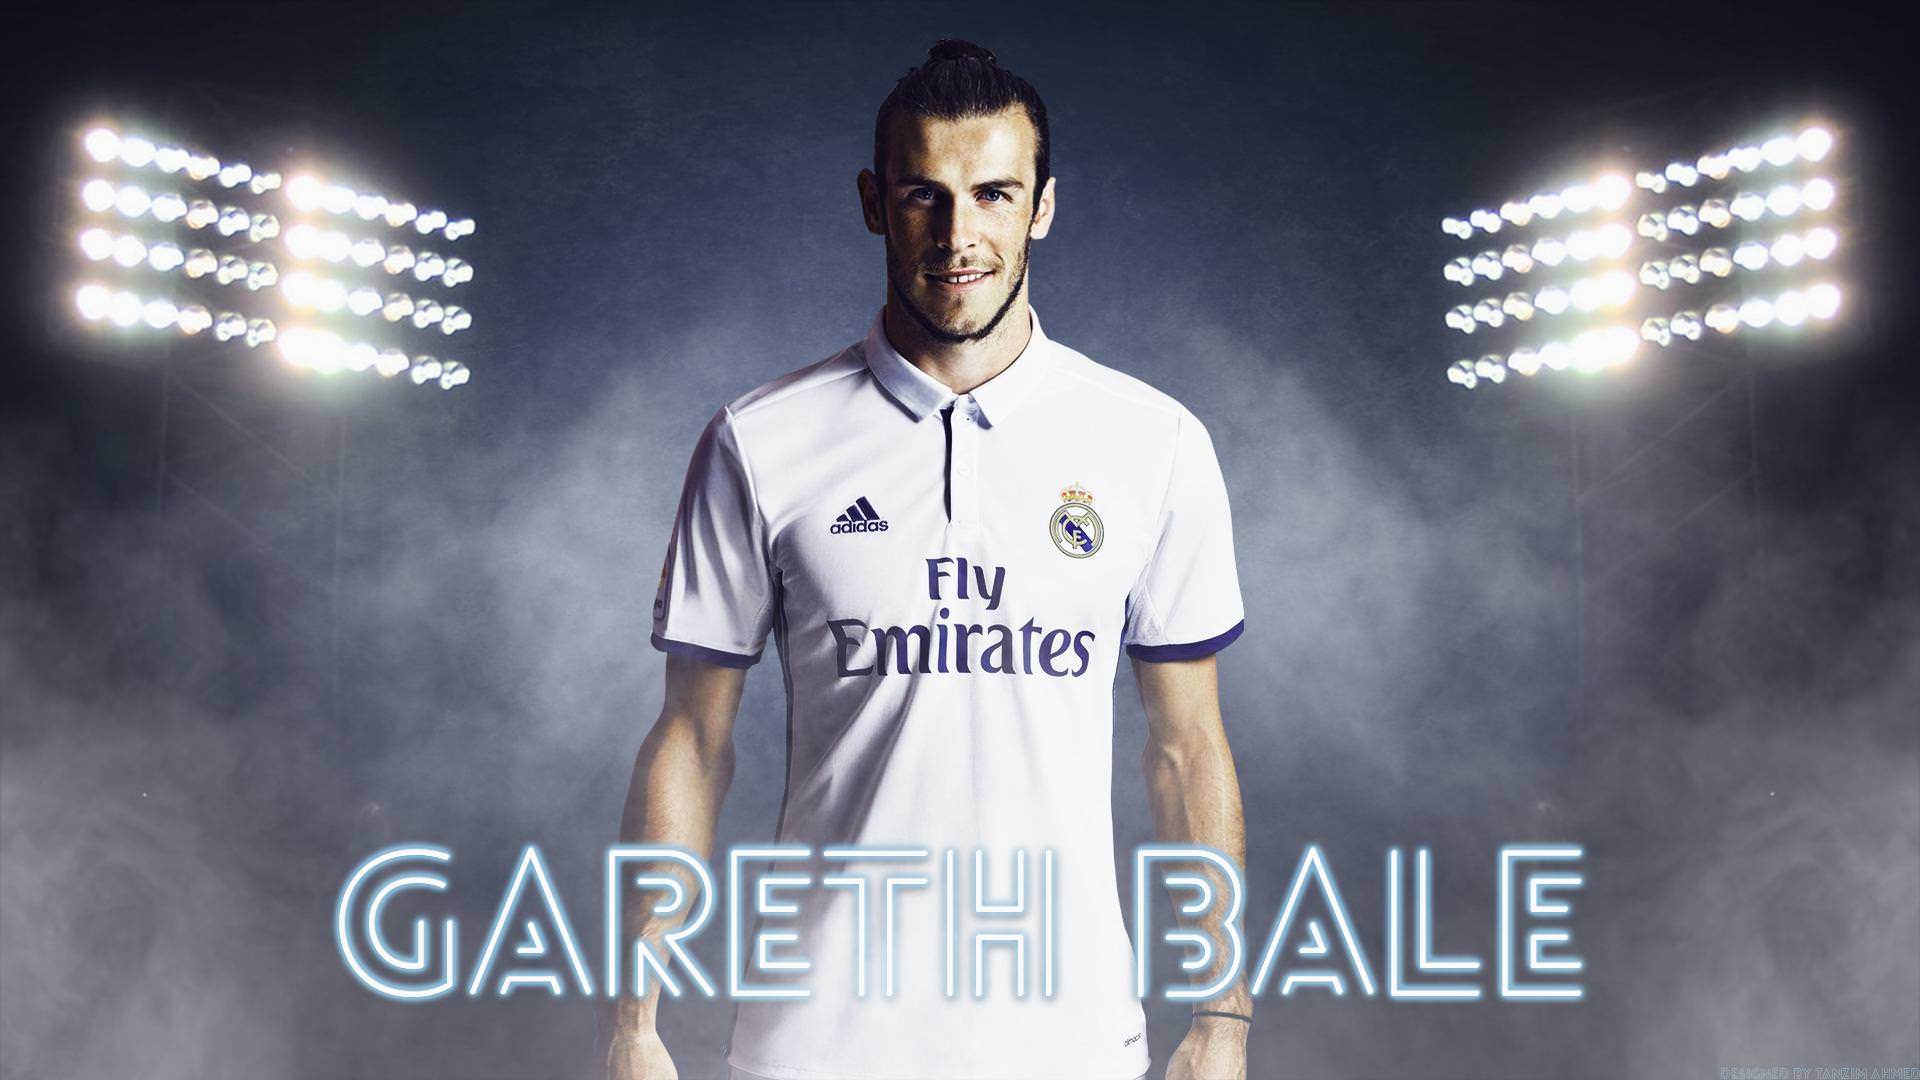 Gareth Bale HD Wallpaper For Desktop, iPhone & Mobile